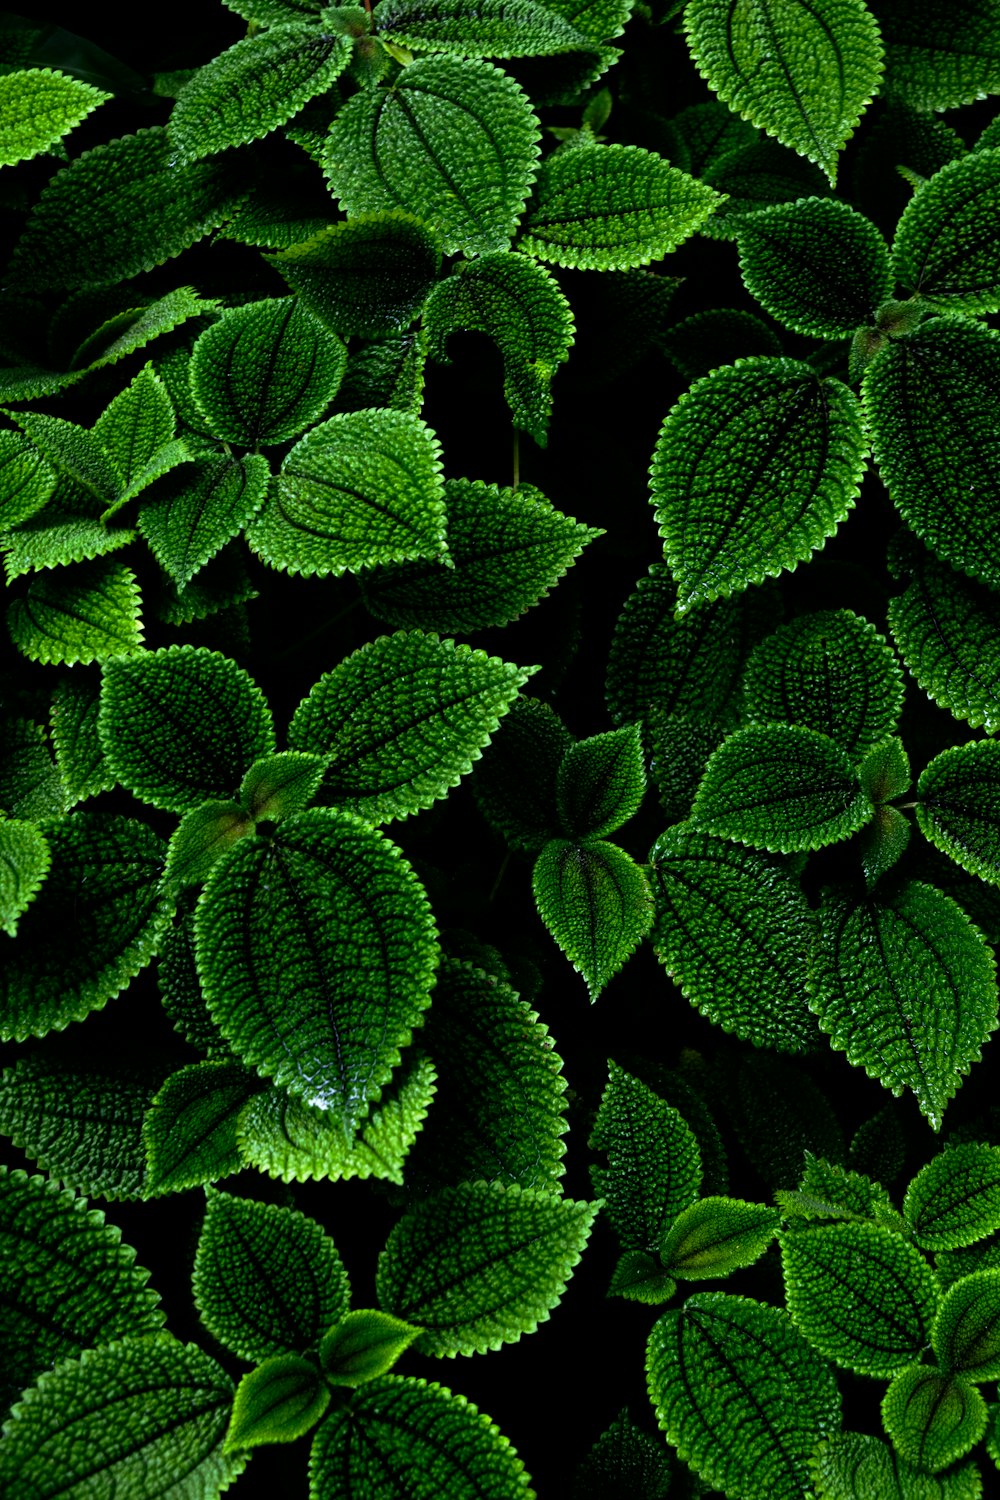 un gruppo di foglie verdi